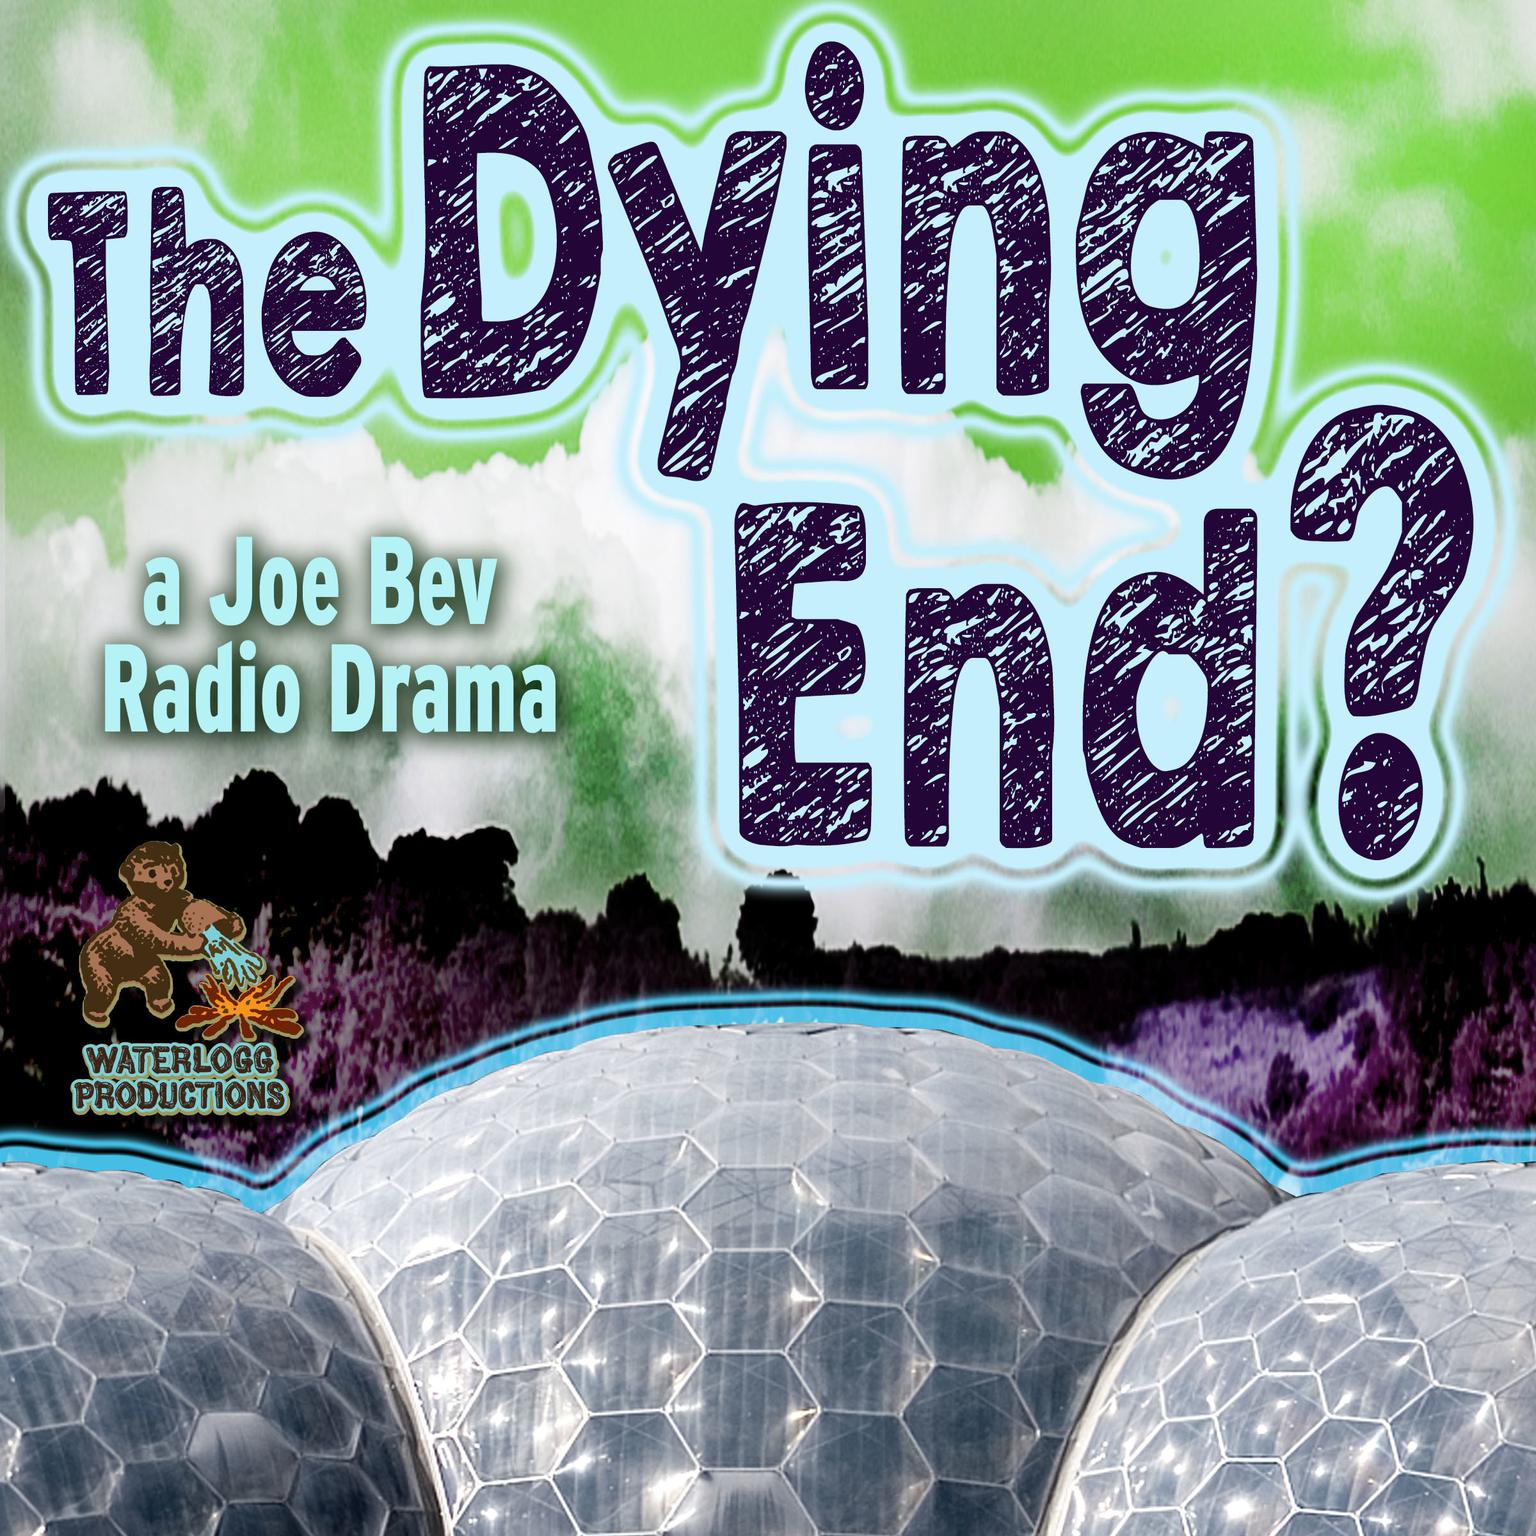 The Dying End?: A Joe Bev Radio Drama  Audiobook, by Charles Dawson Butler